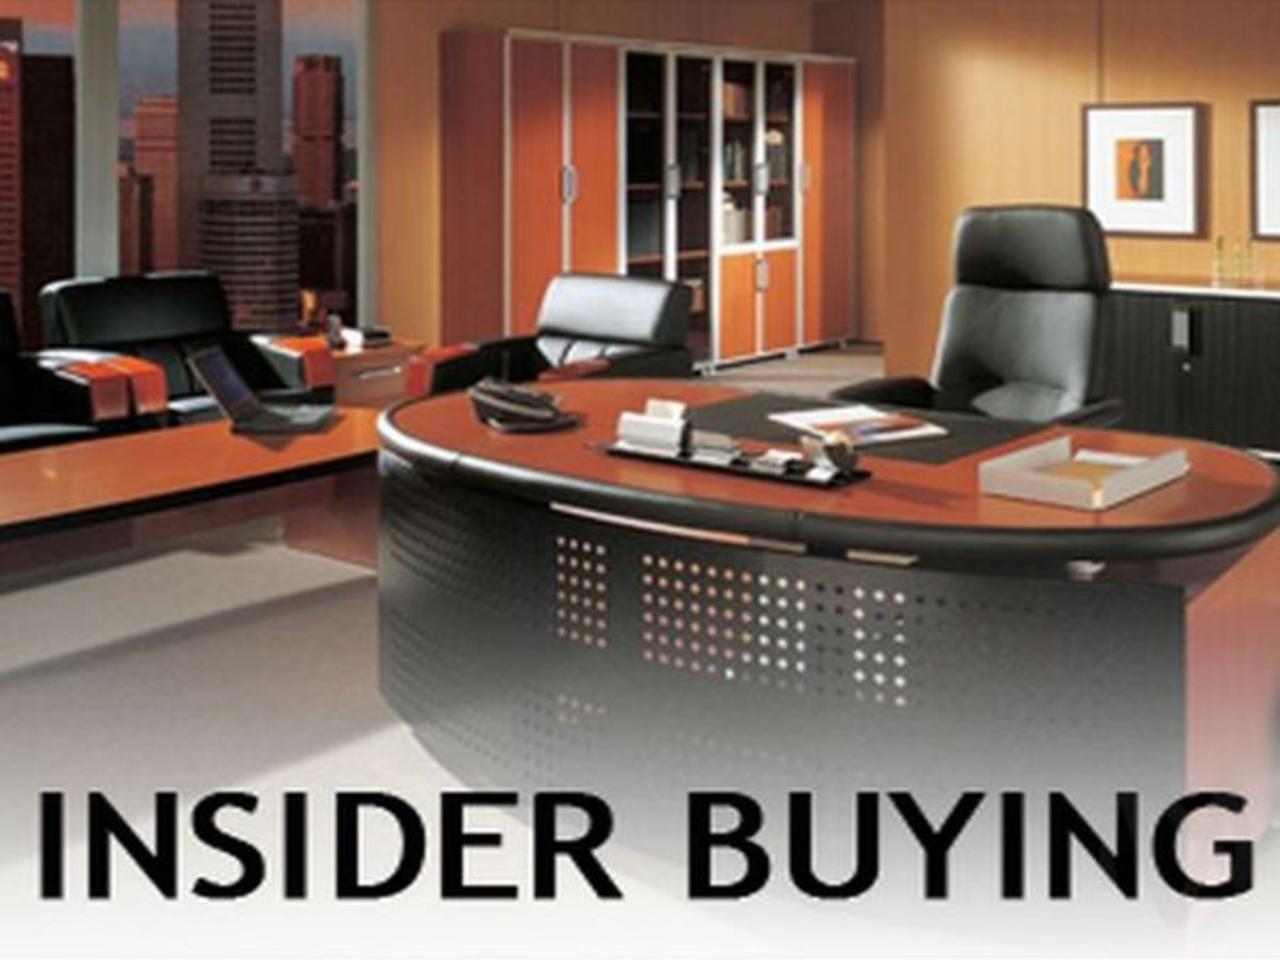 Monday 11/29 Insider Buying Report: SRRA, MNRO